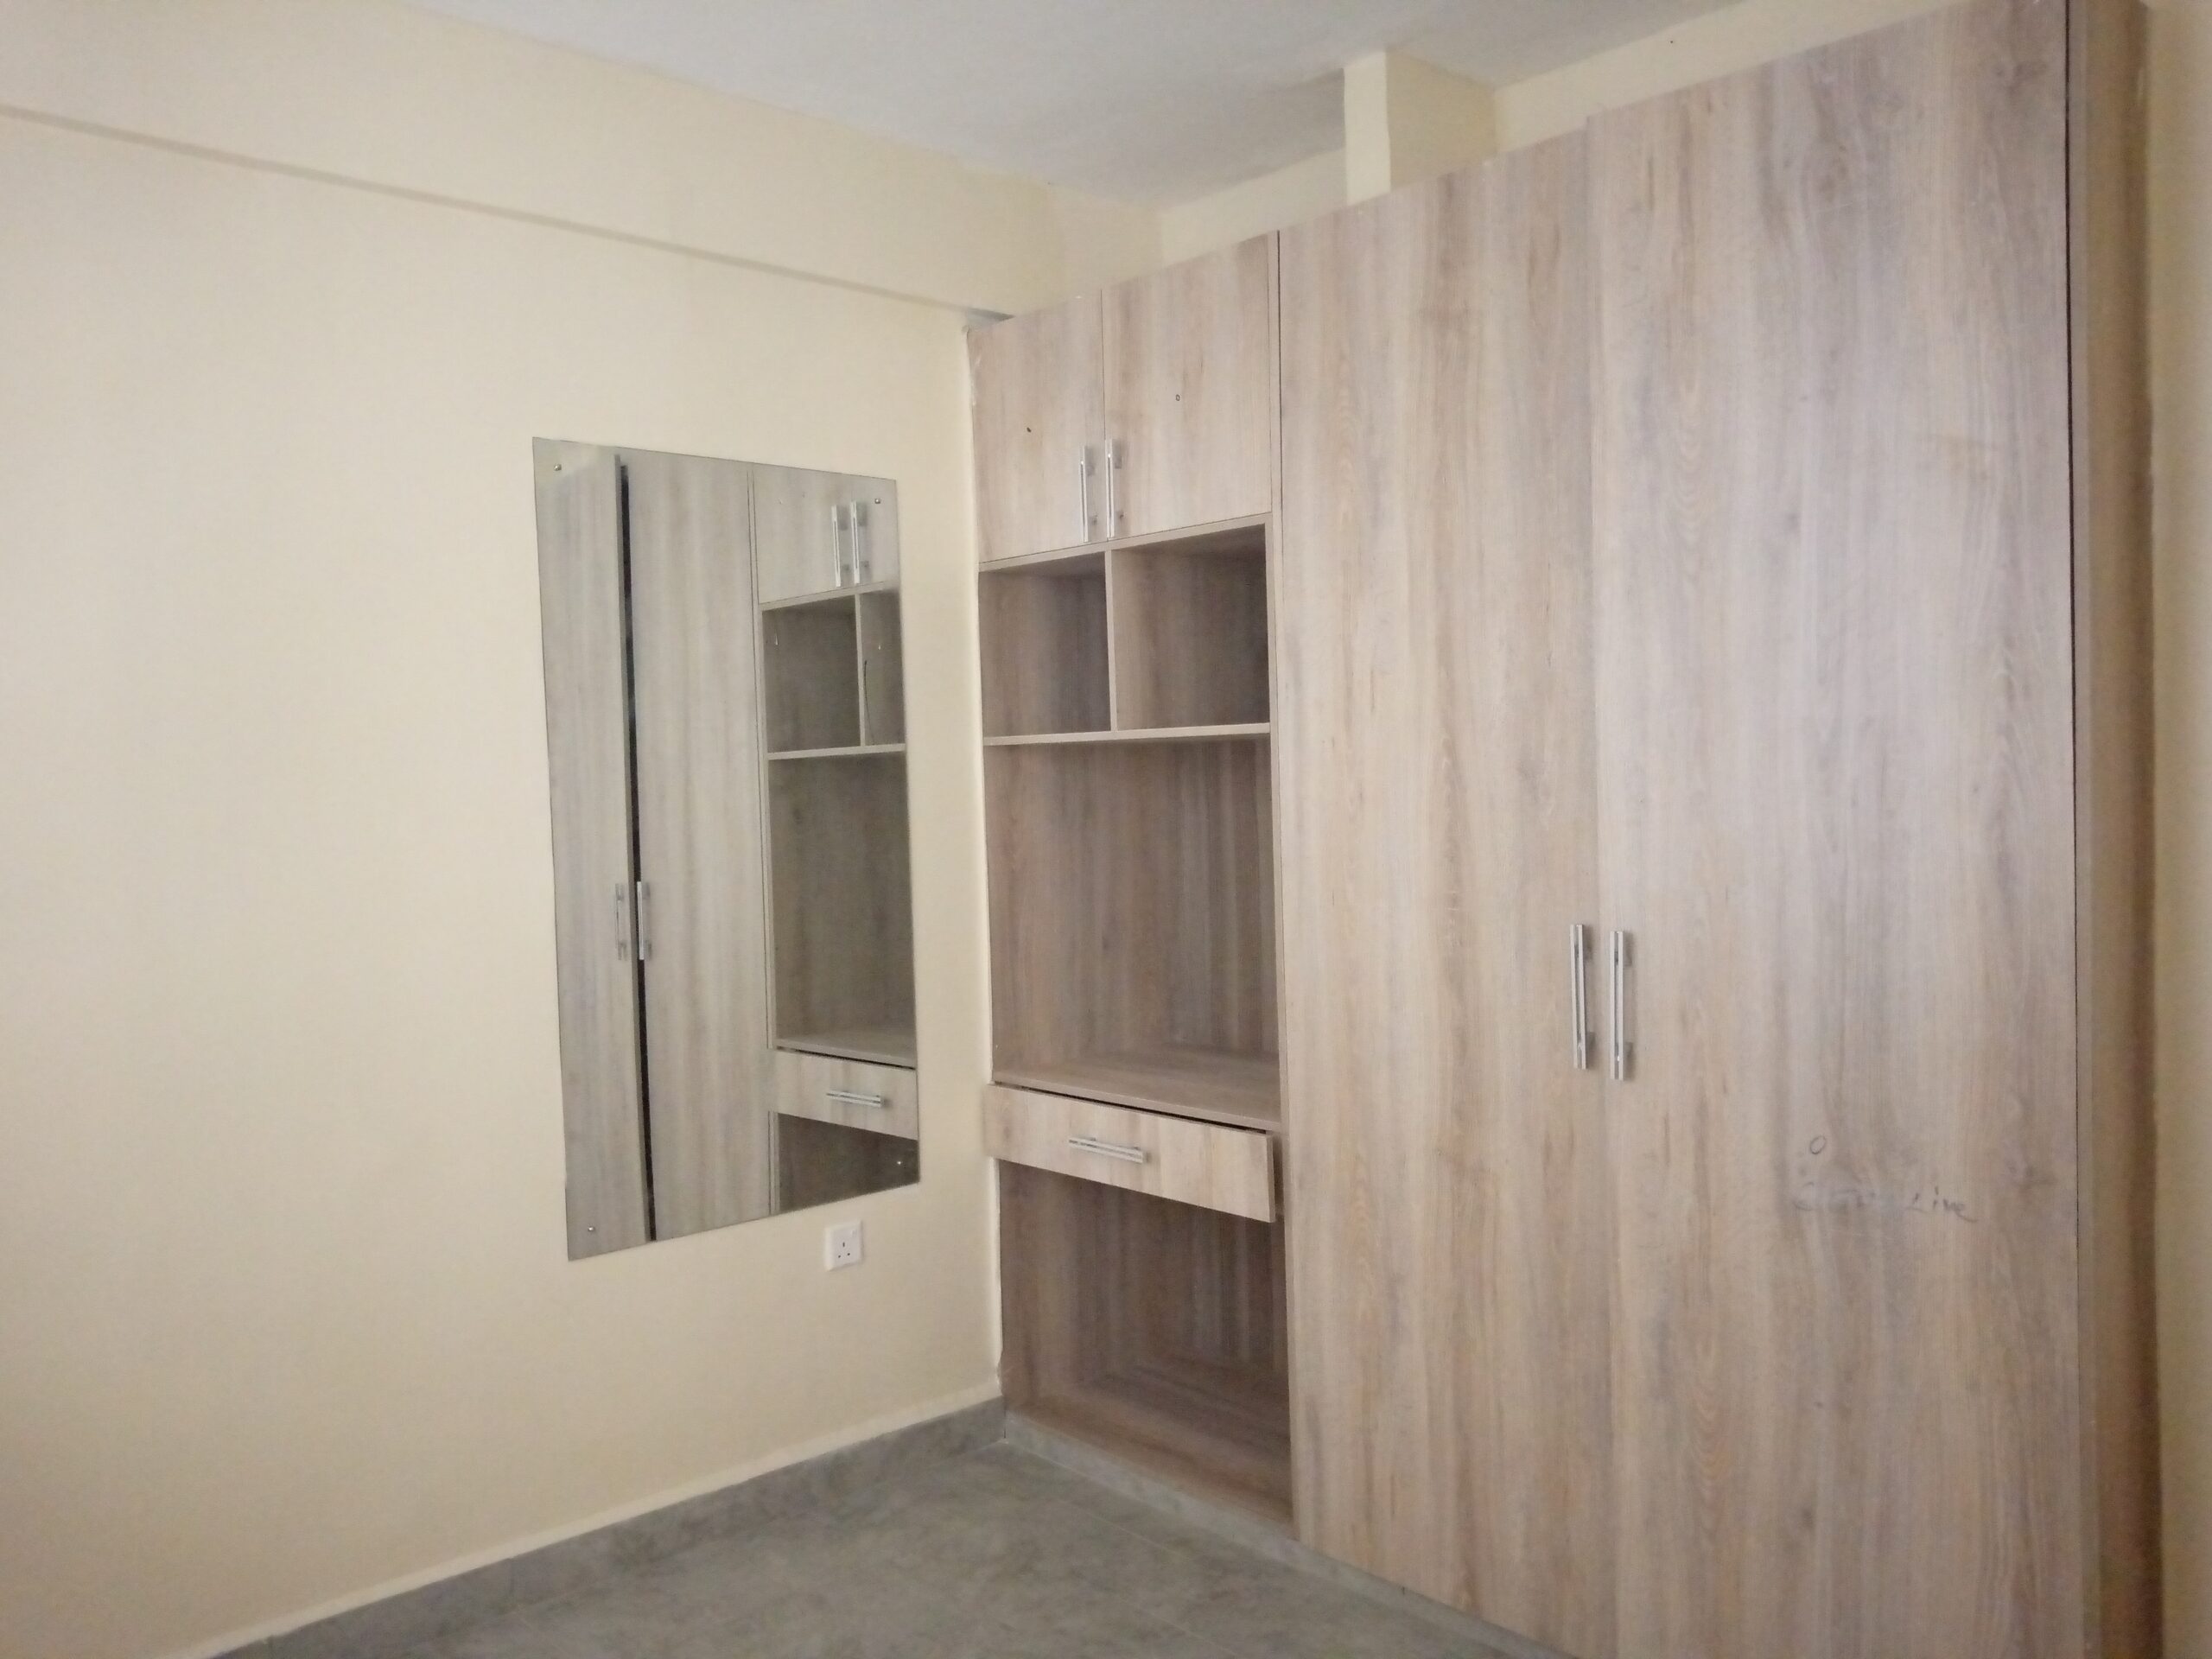 1 Bedroom Apartment at Ngong rd Dagoratti corner